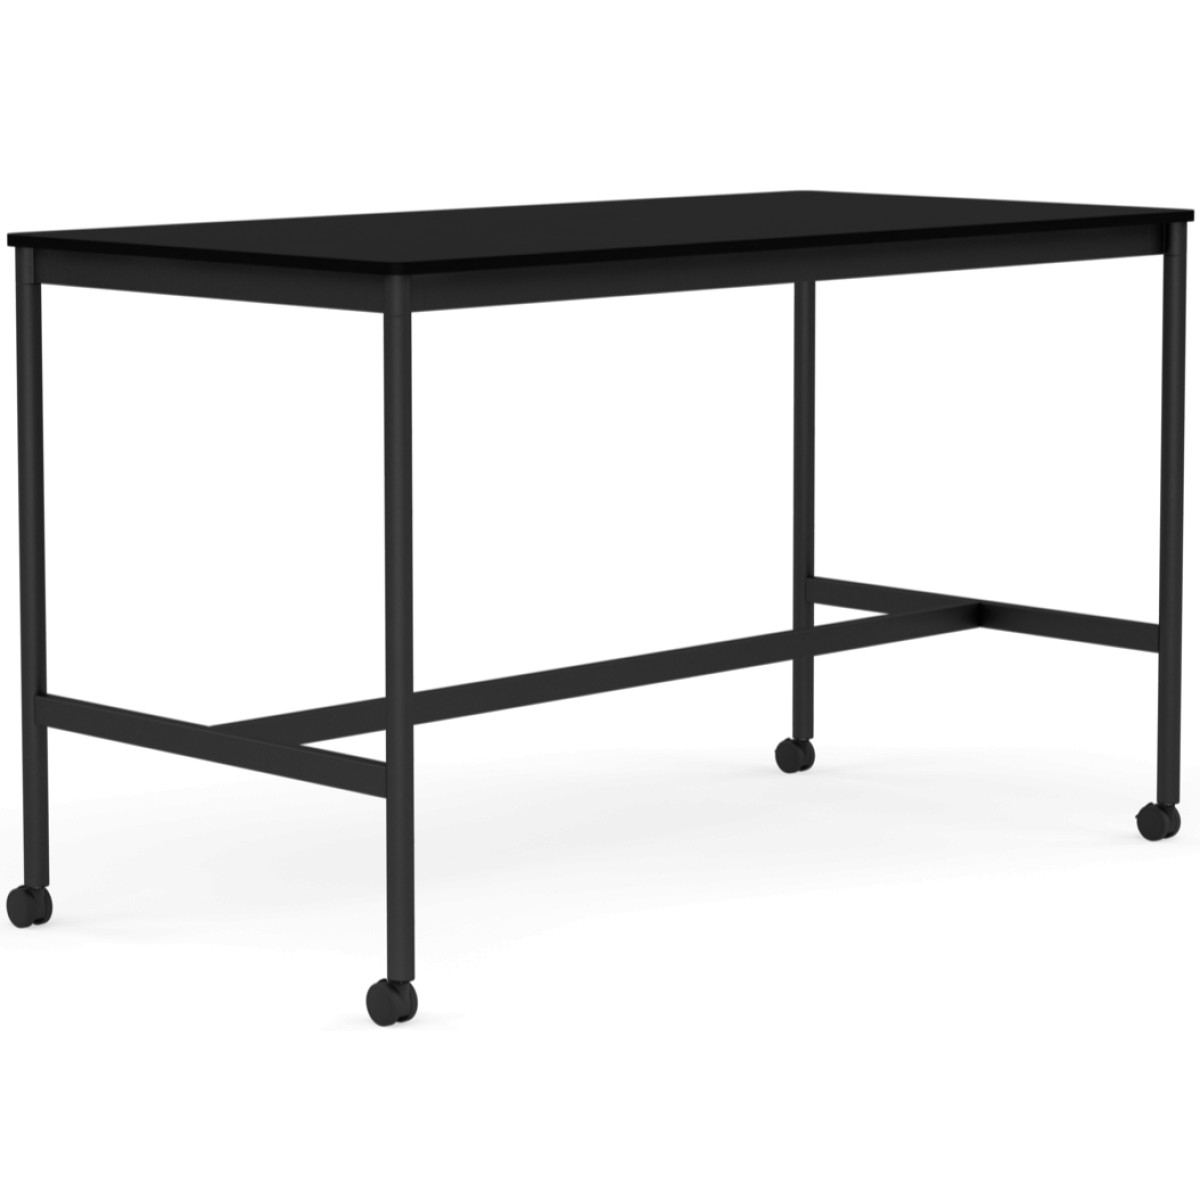 Base High Table with Castors / 160 x 80 cm